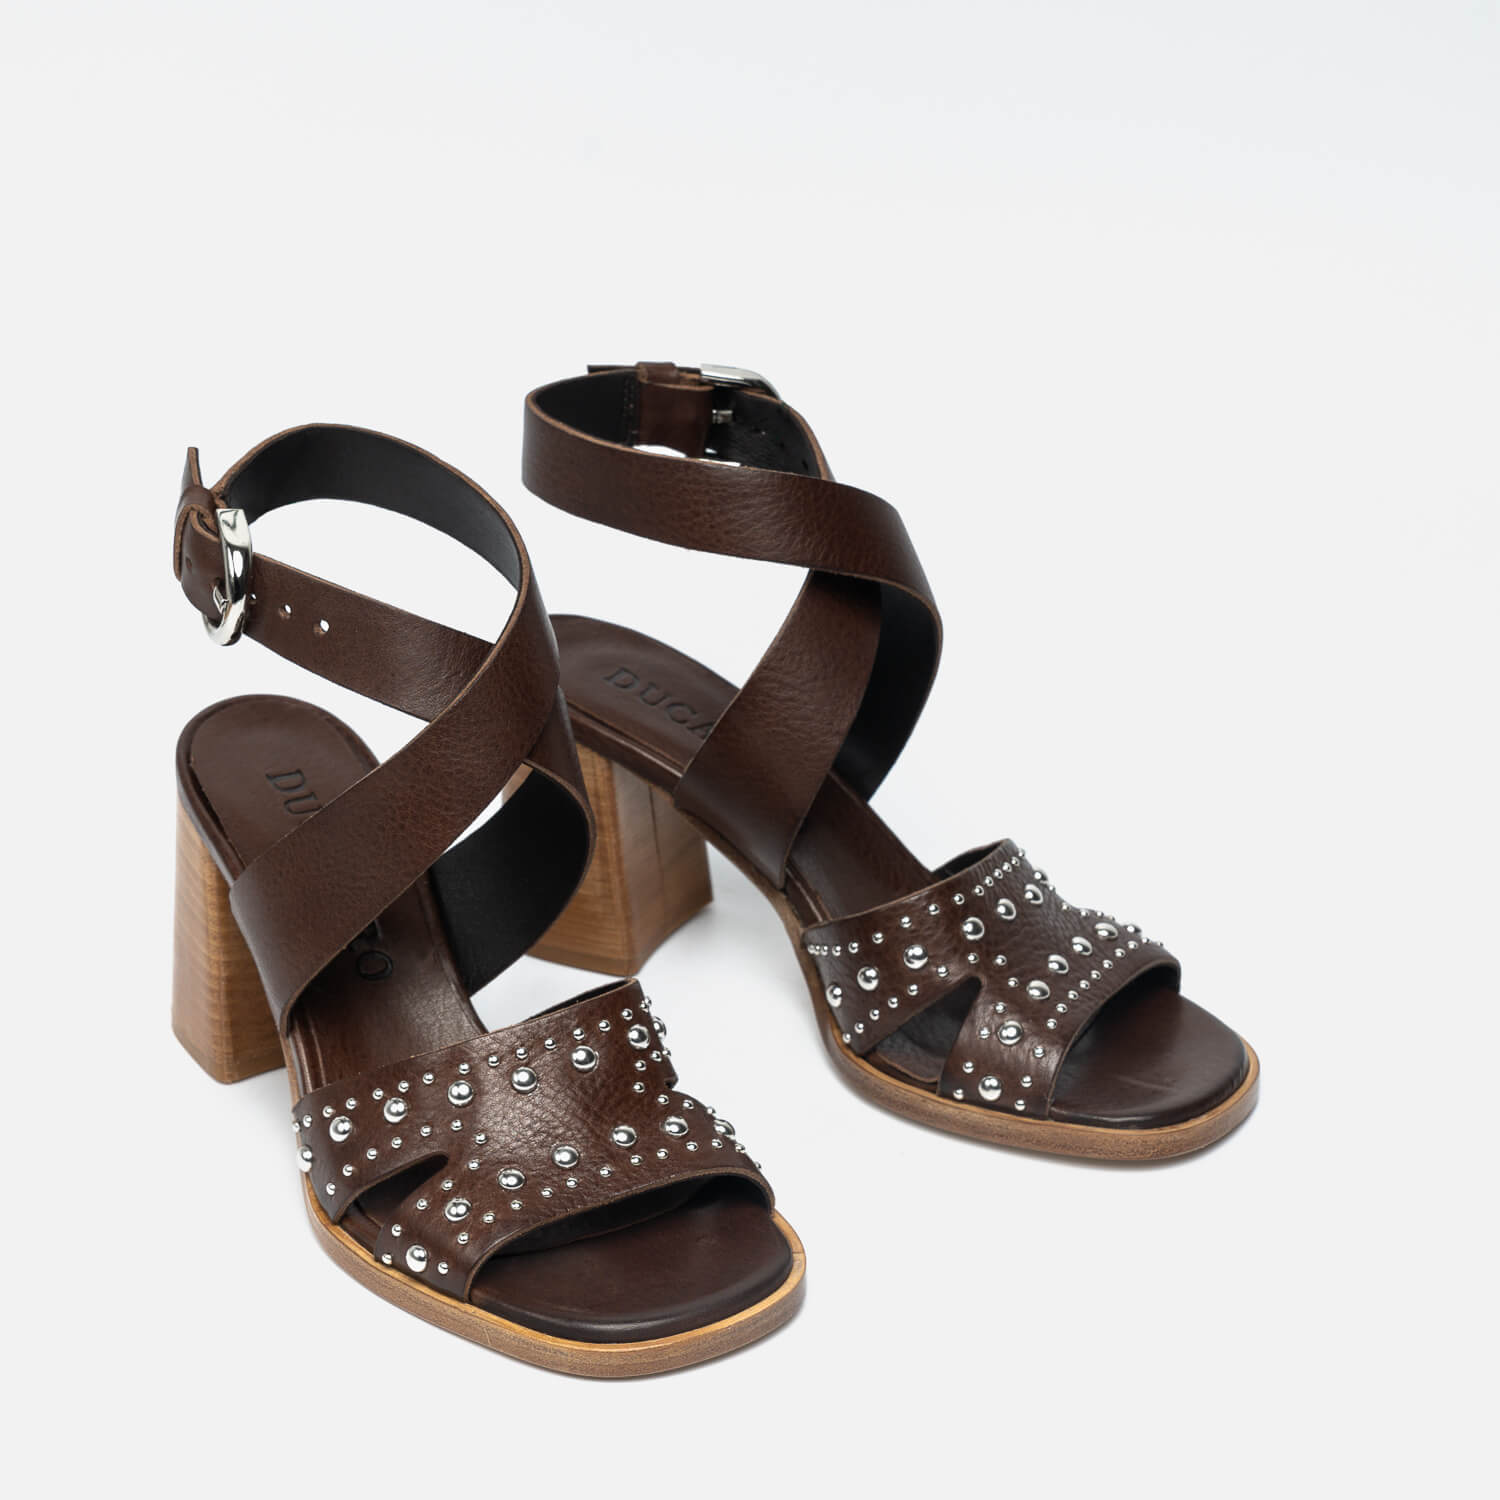 Beatrice | Model 3736 sandals brown